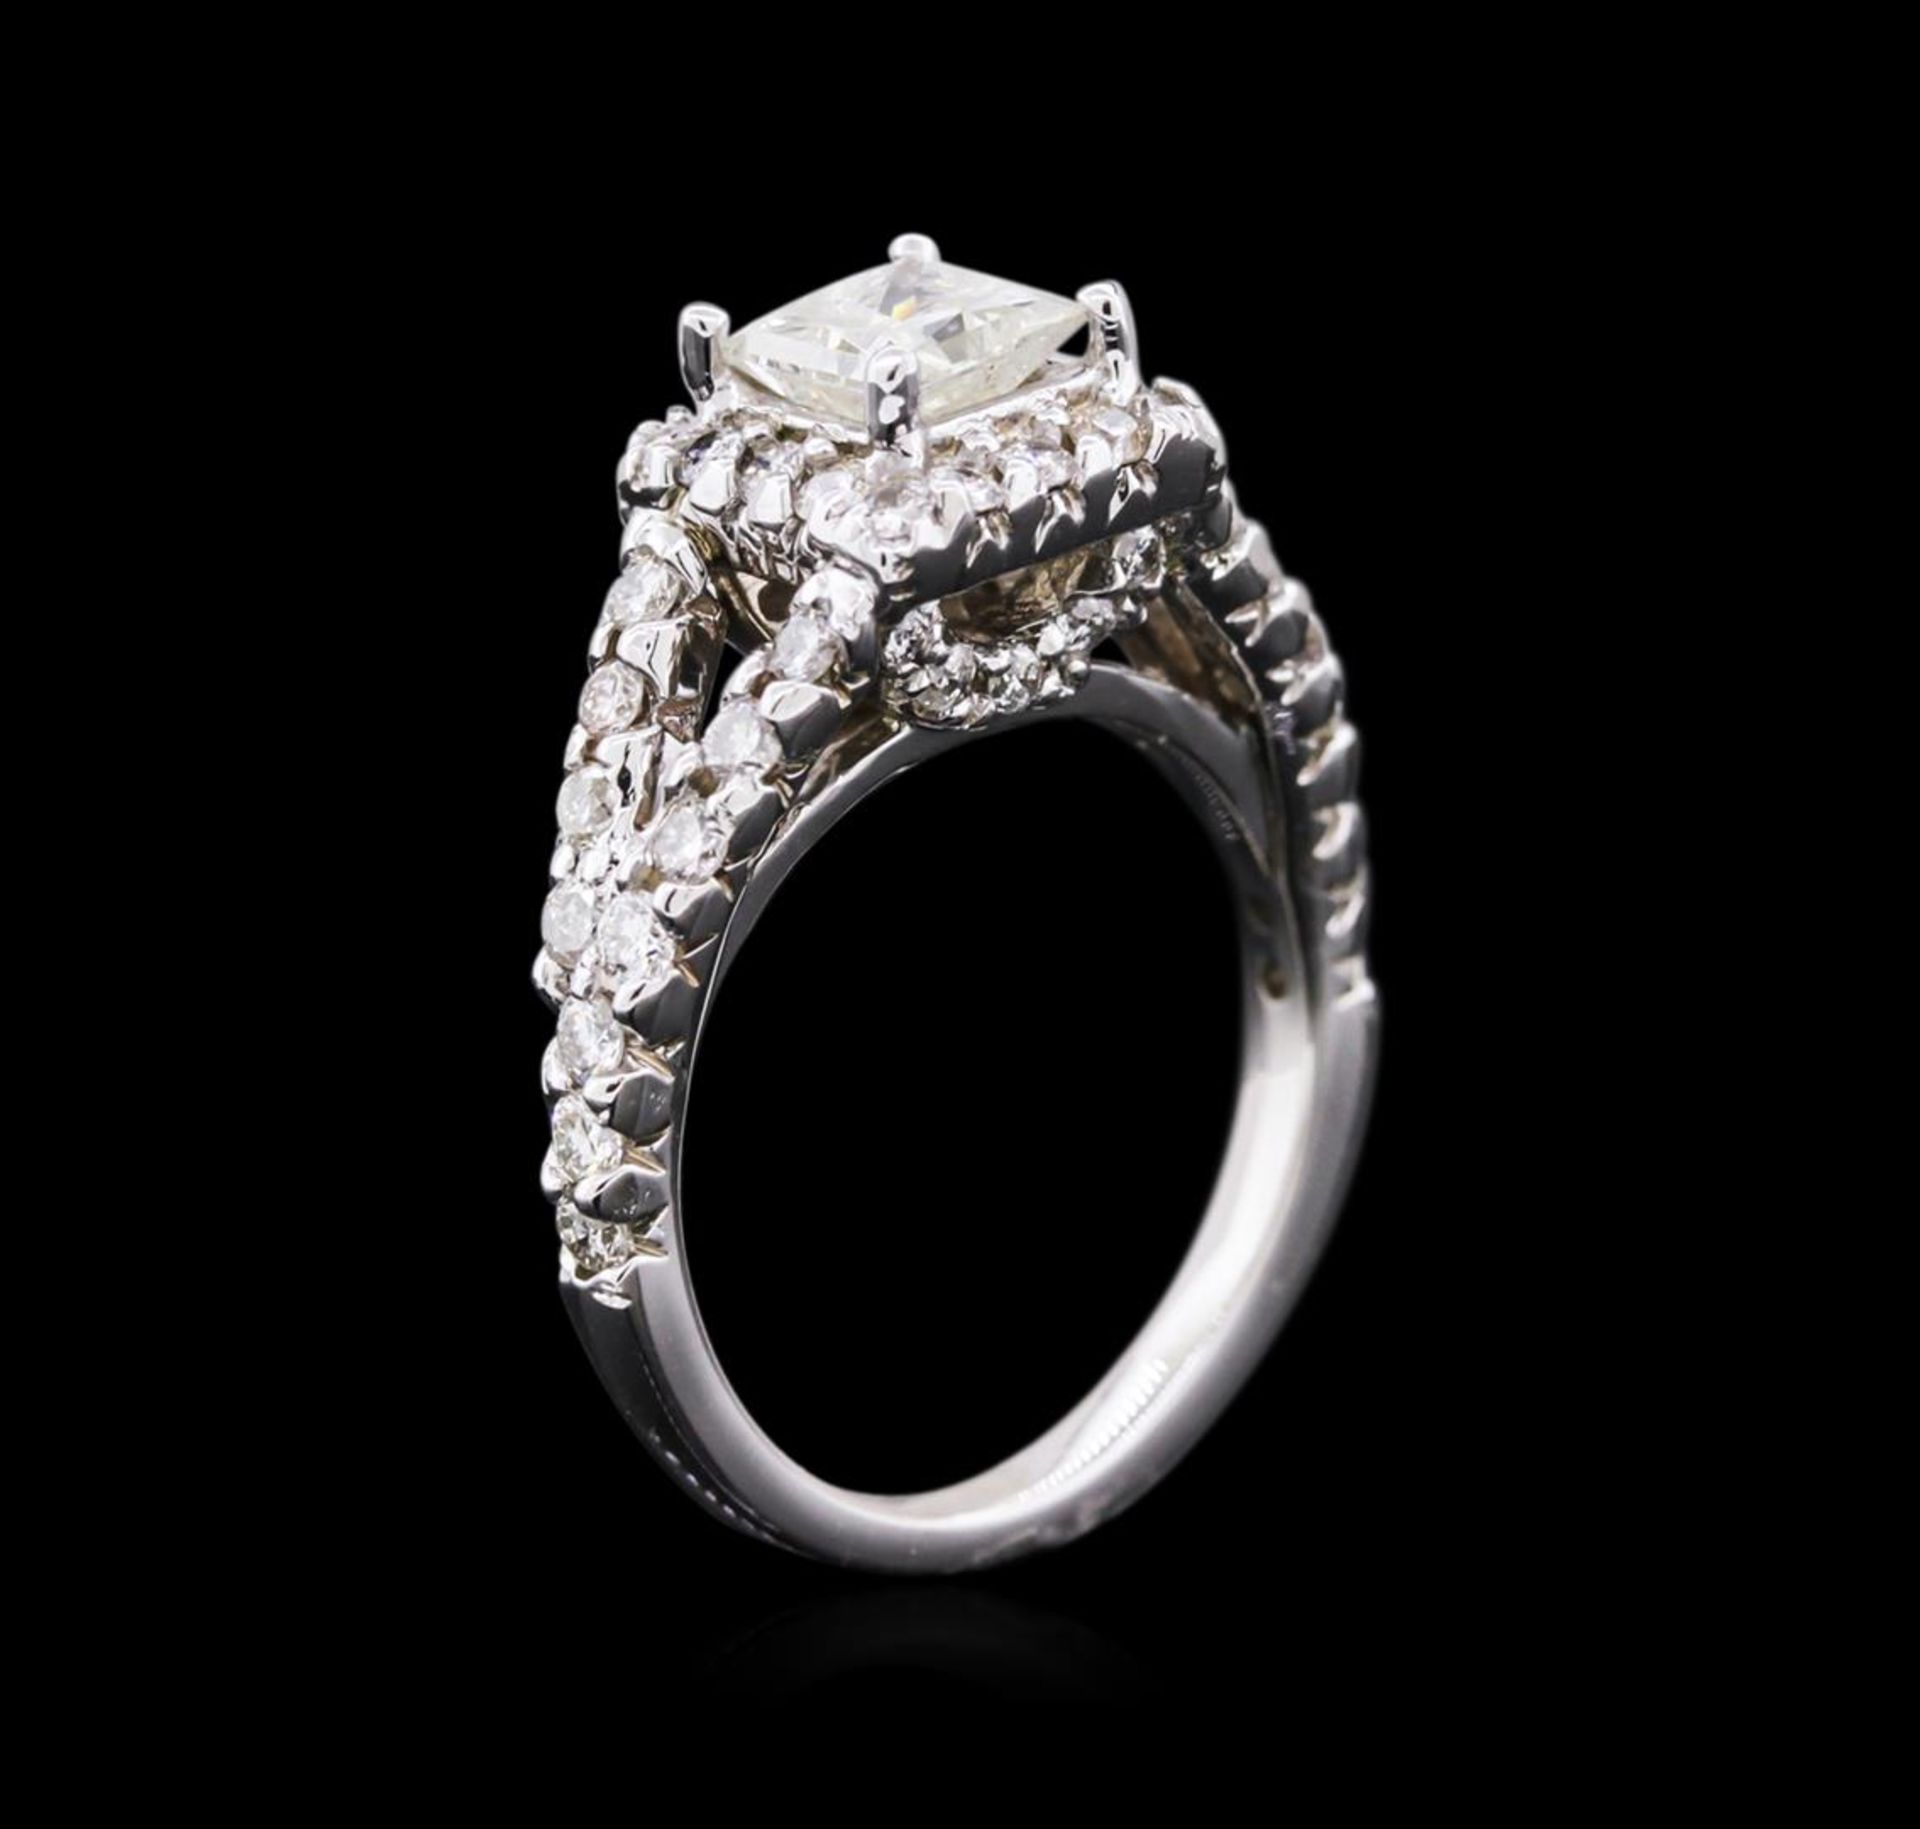 2.13 ctw Diamond Ring - 14KT White Gold - Image 3 of 4